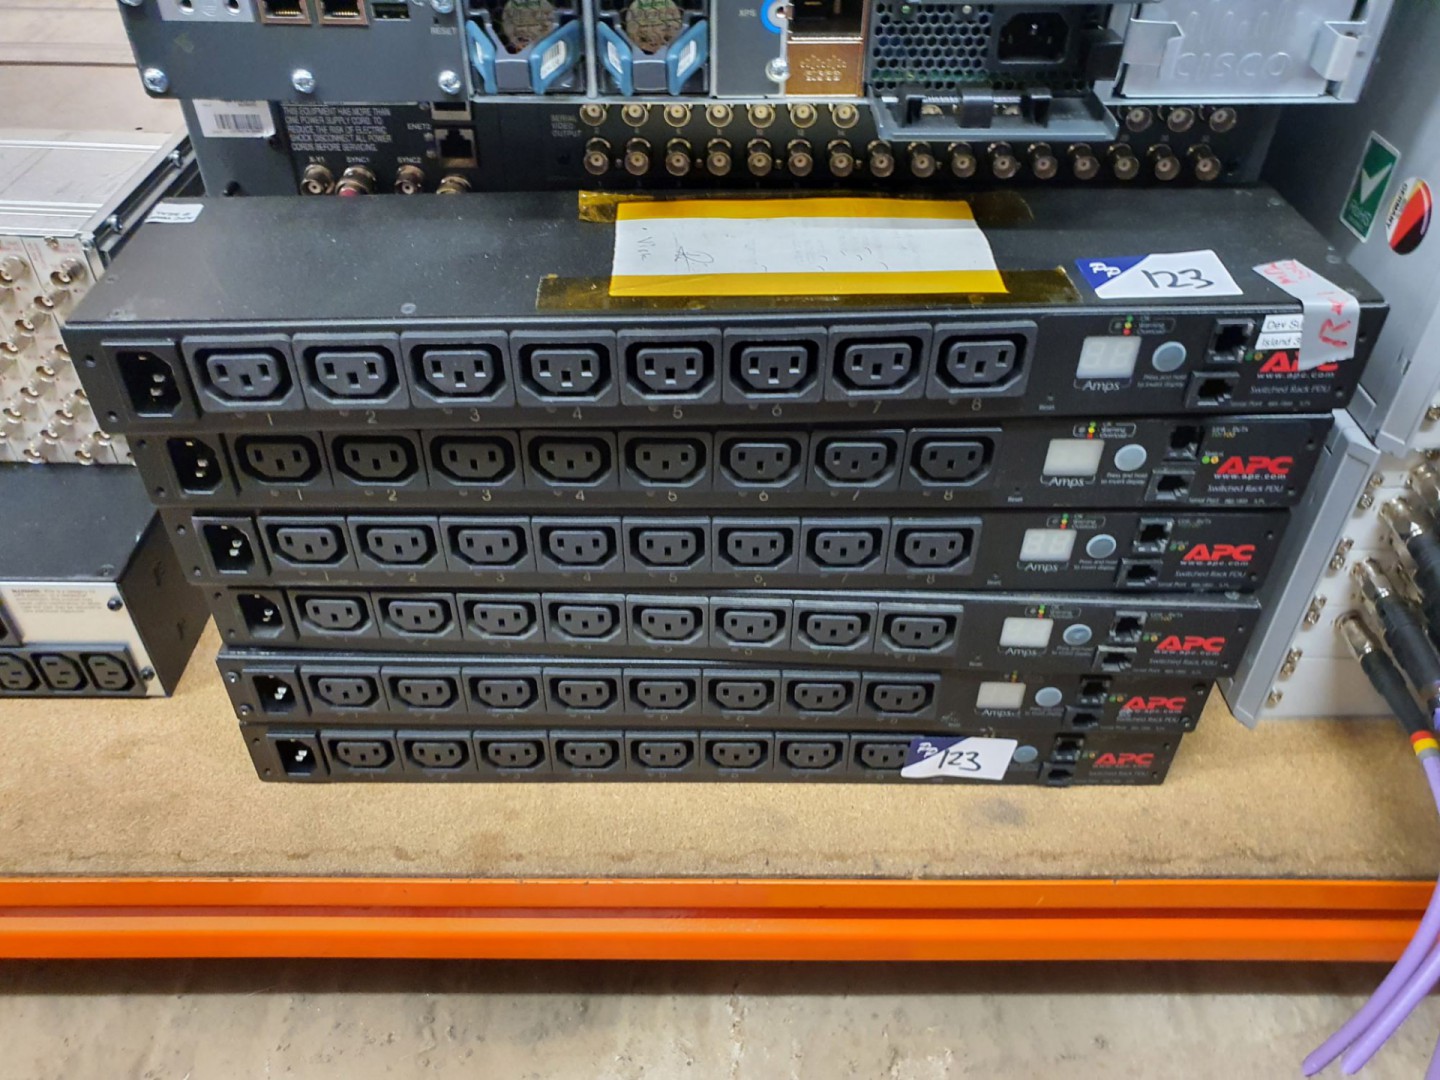 6x APC 10/100 switched rack PDU's